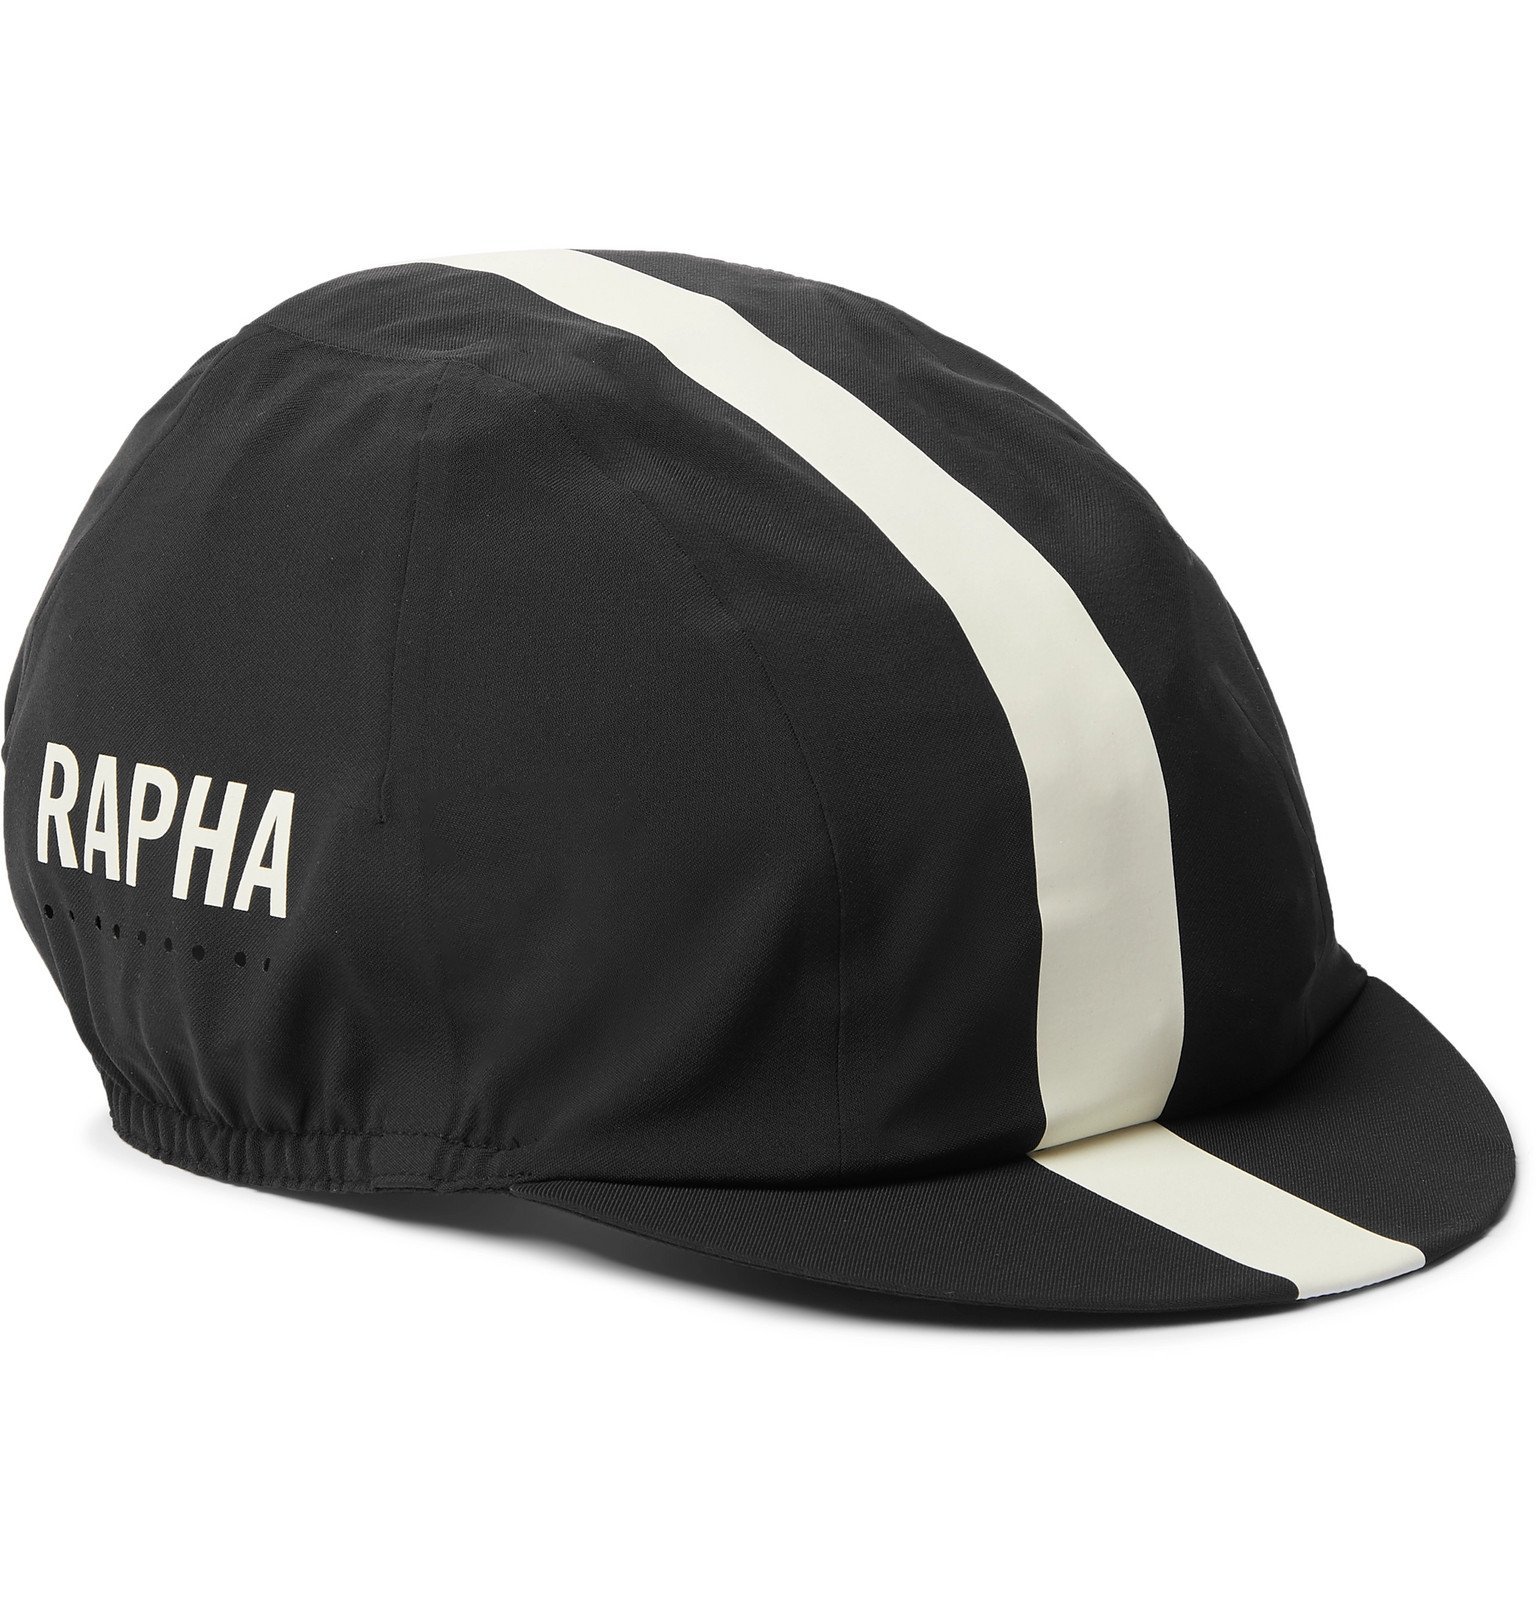 Rapha - Pro Team Cycling Cap - Black Rapha